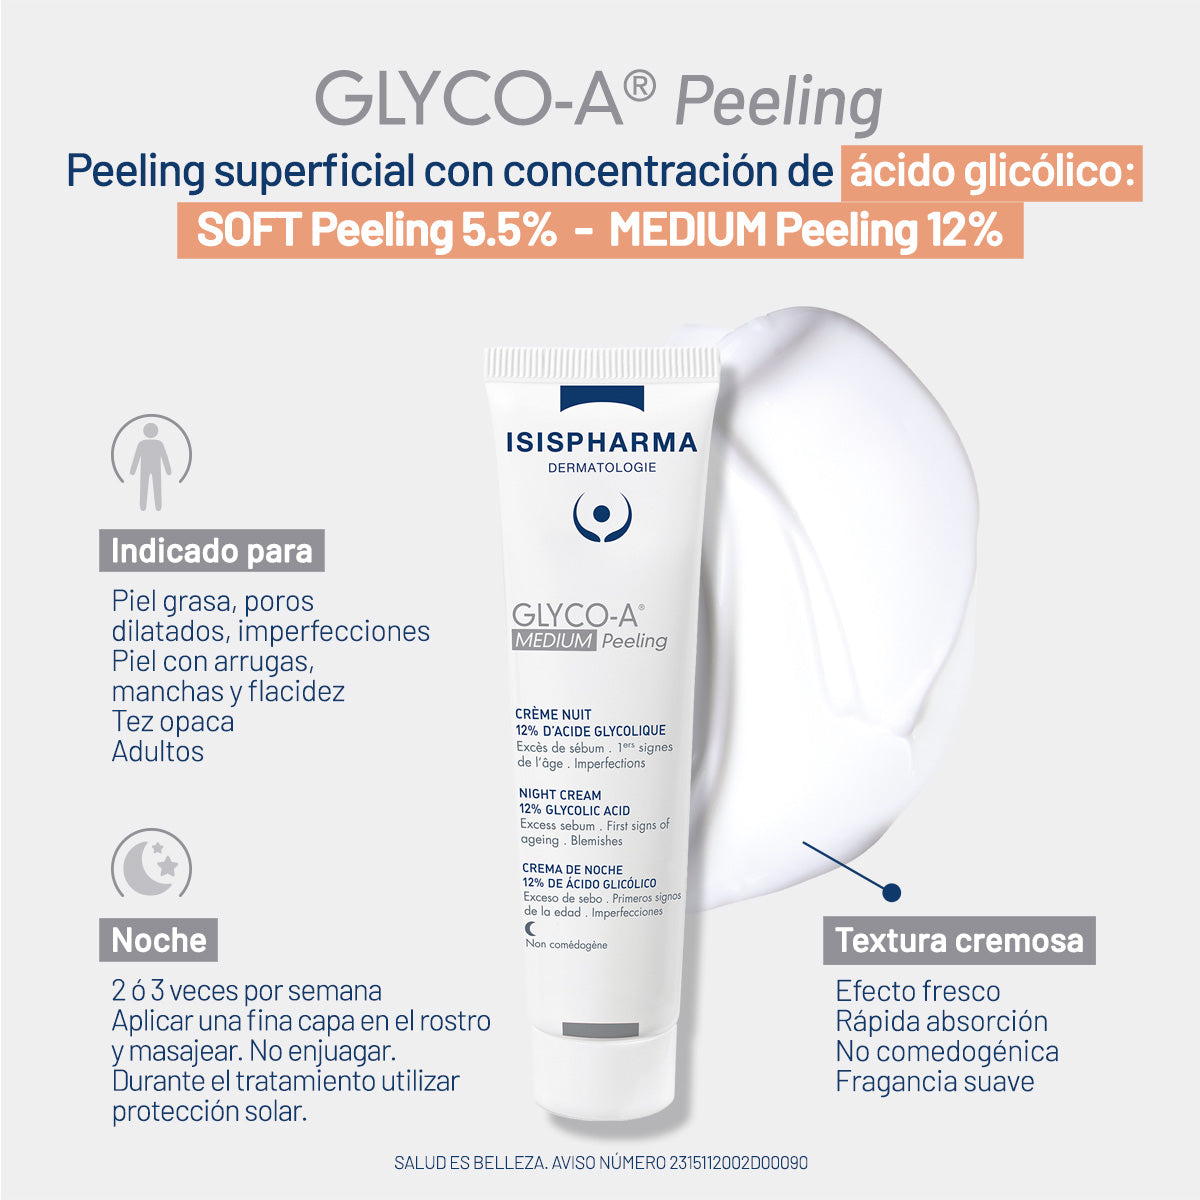 Glyco-a peeling medio 12% 30ml.